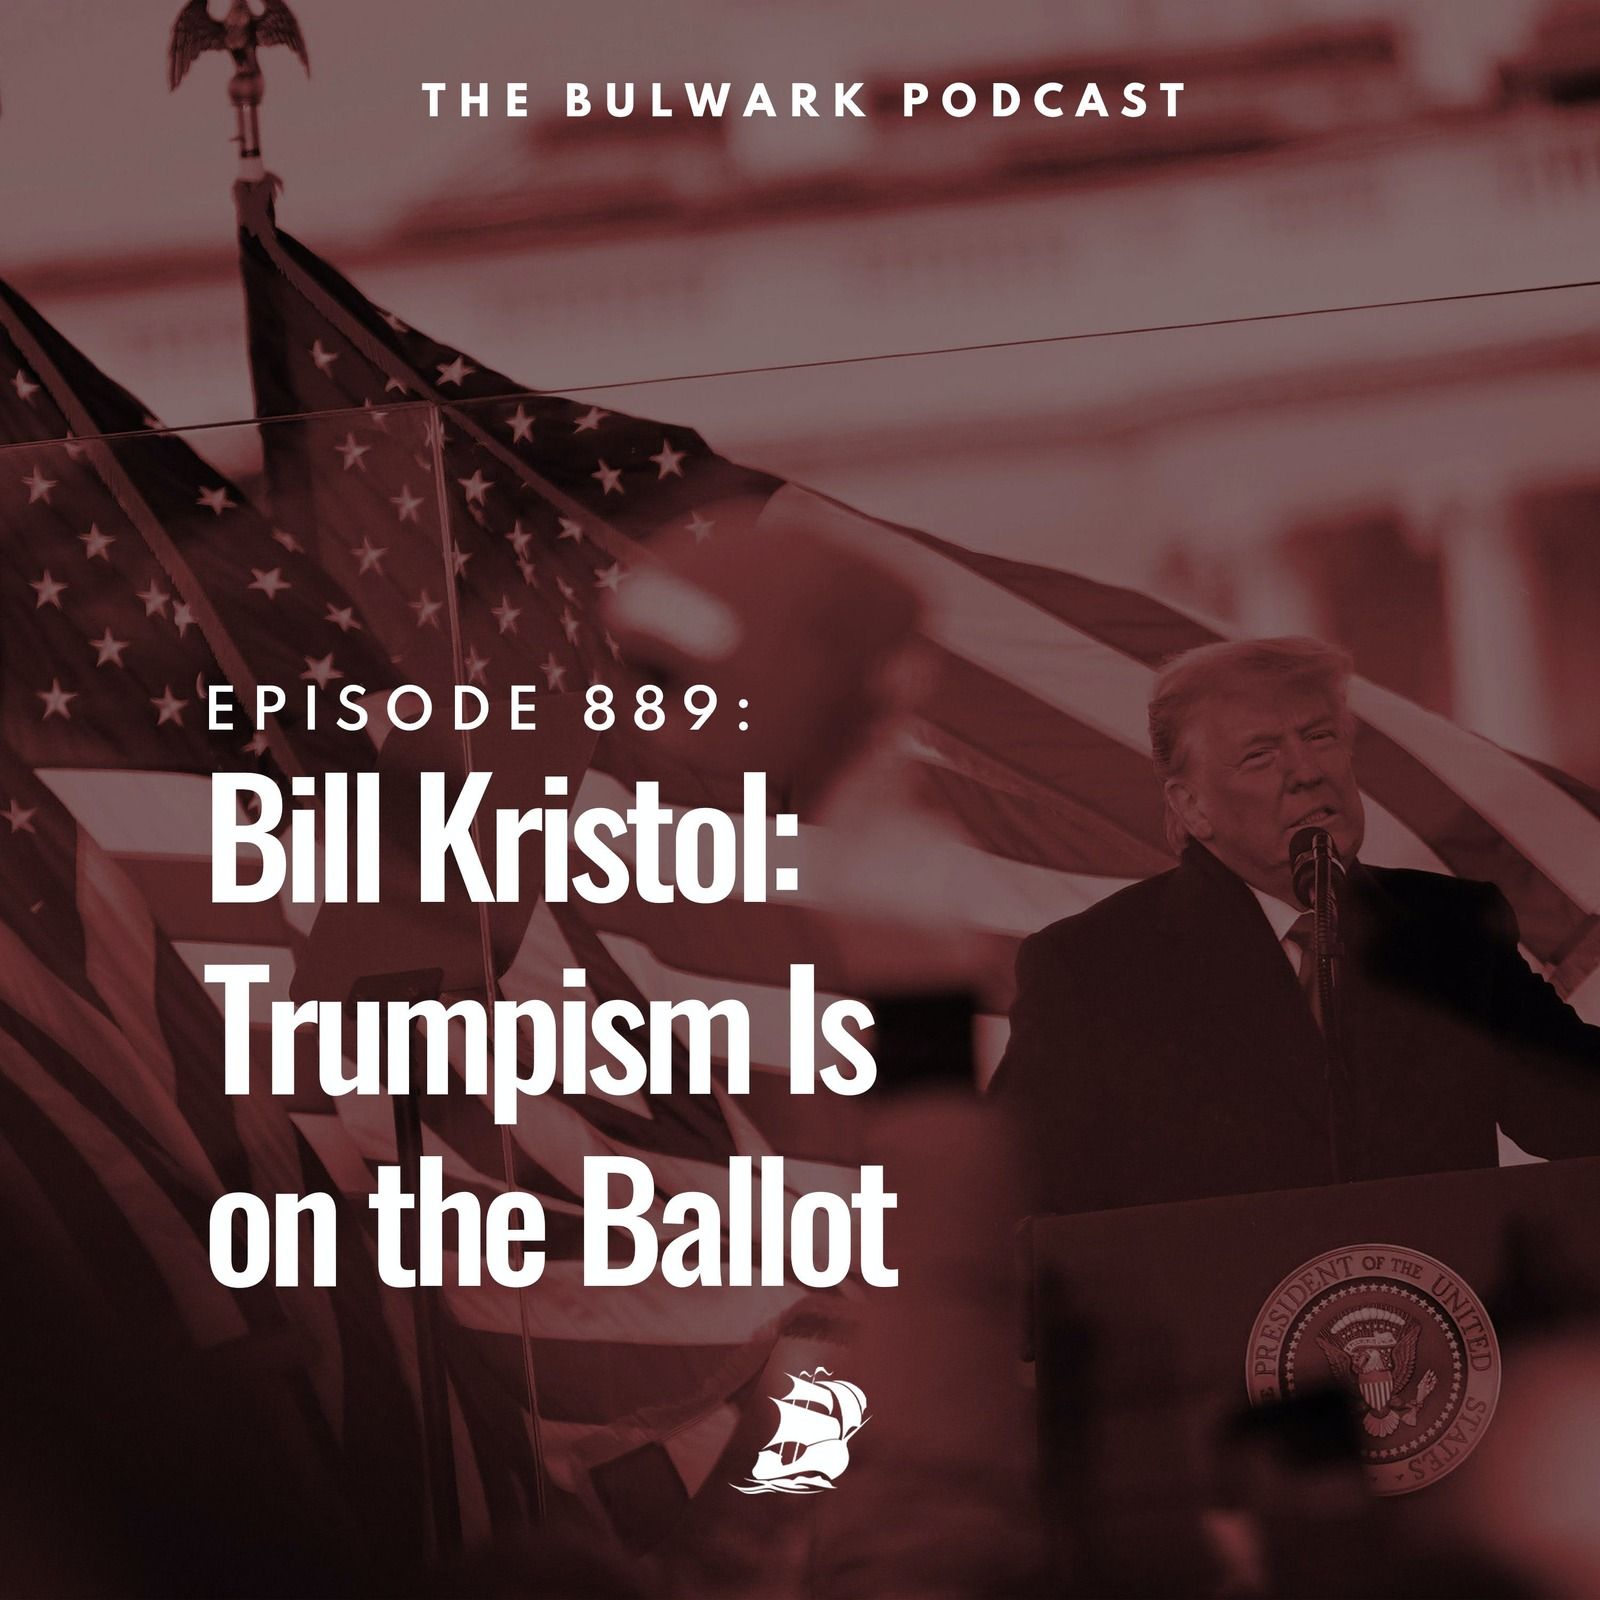 Bill Kristol: Trumpism Is on the Ballot